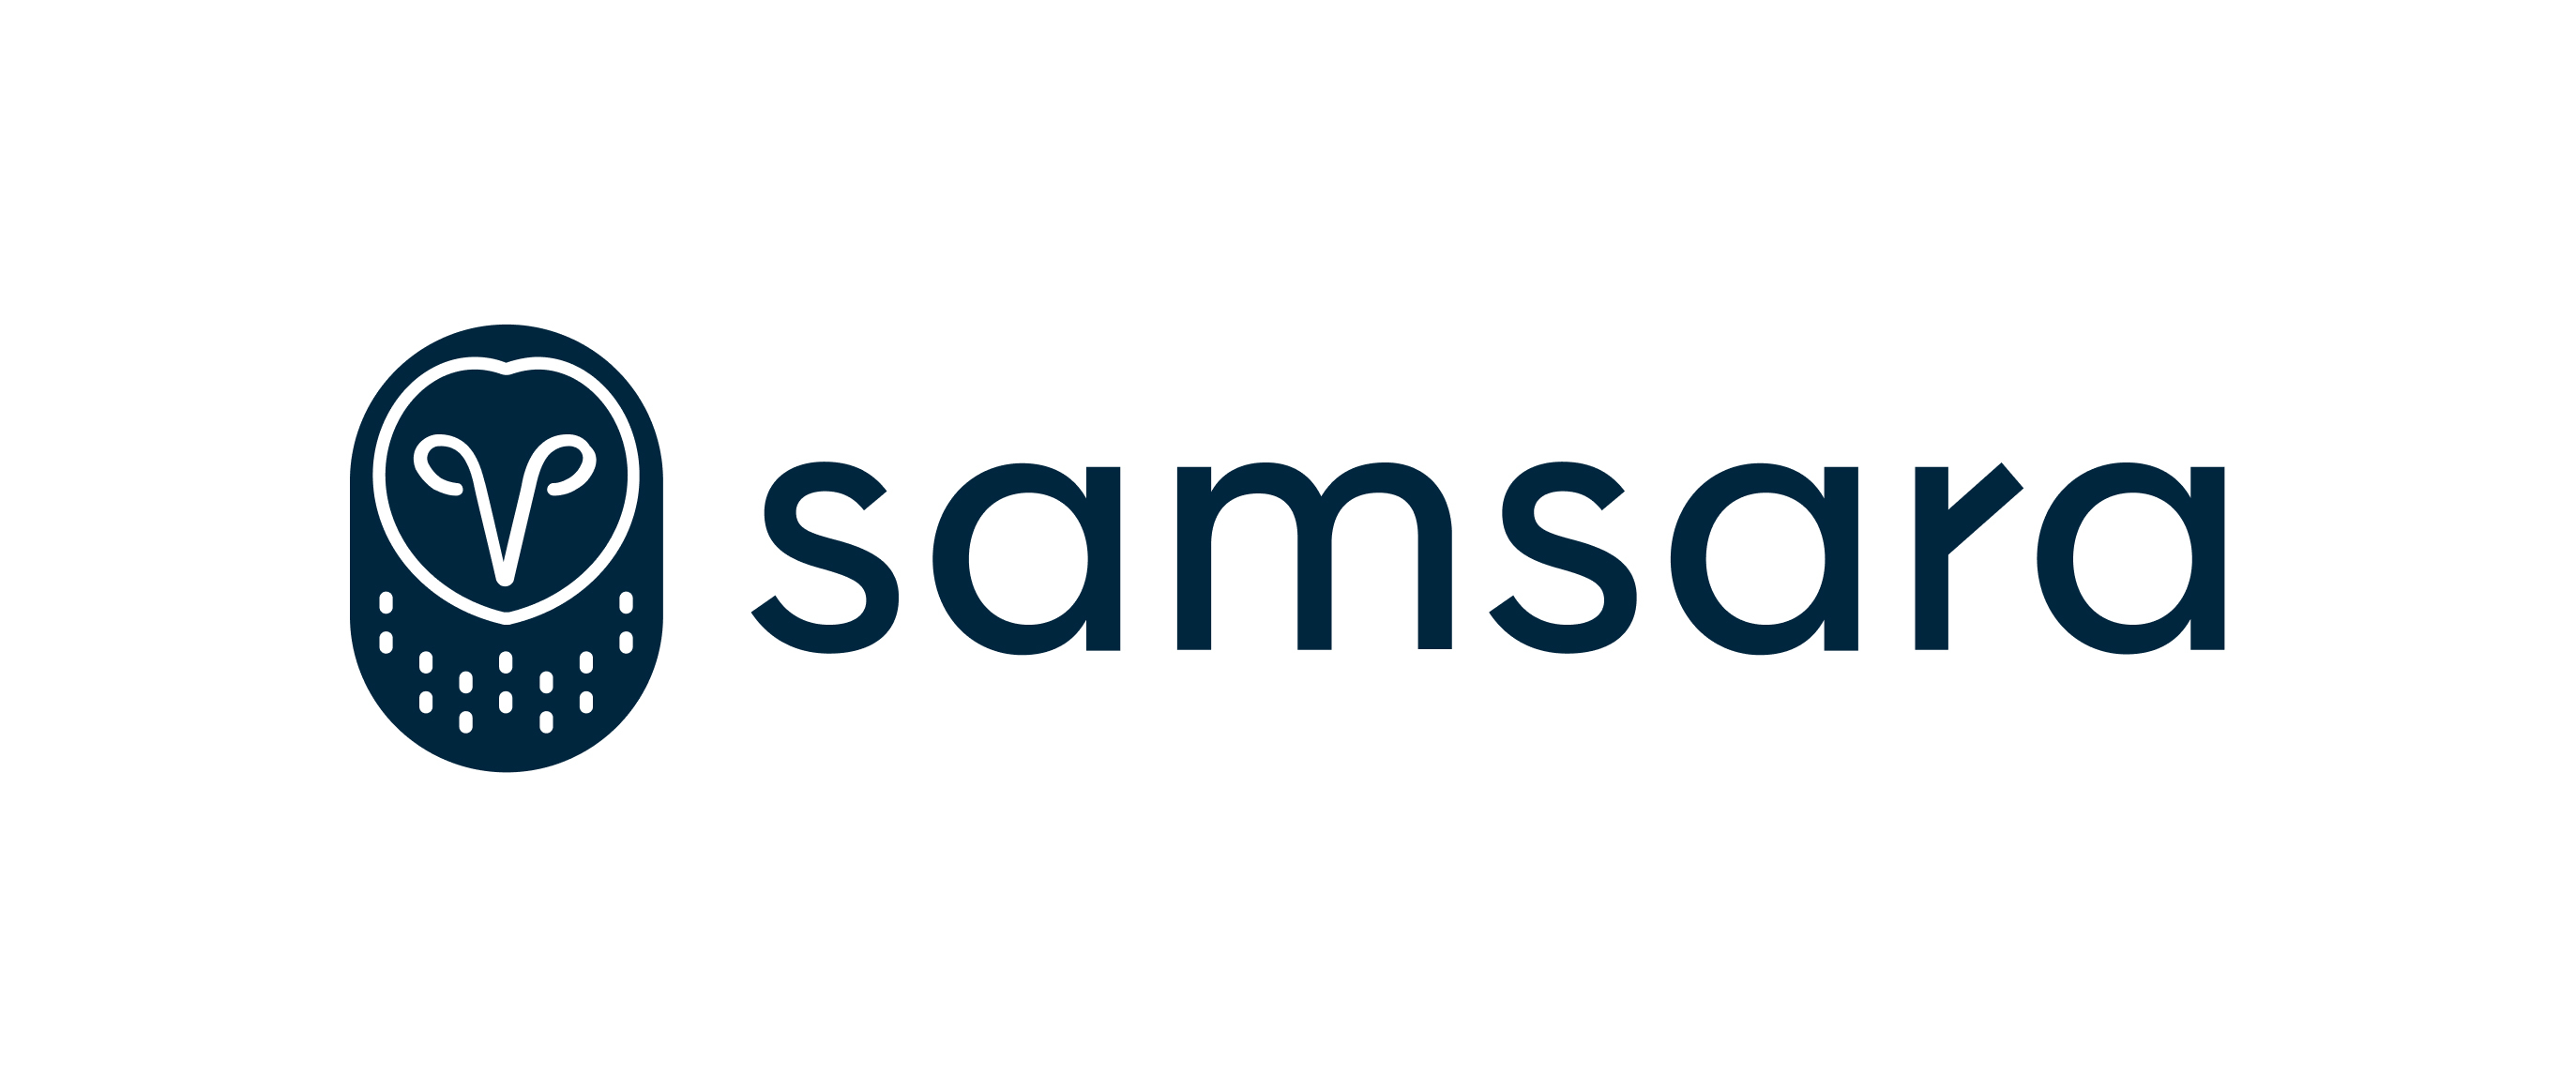 Samsara Environmental Monitor